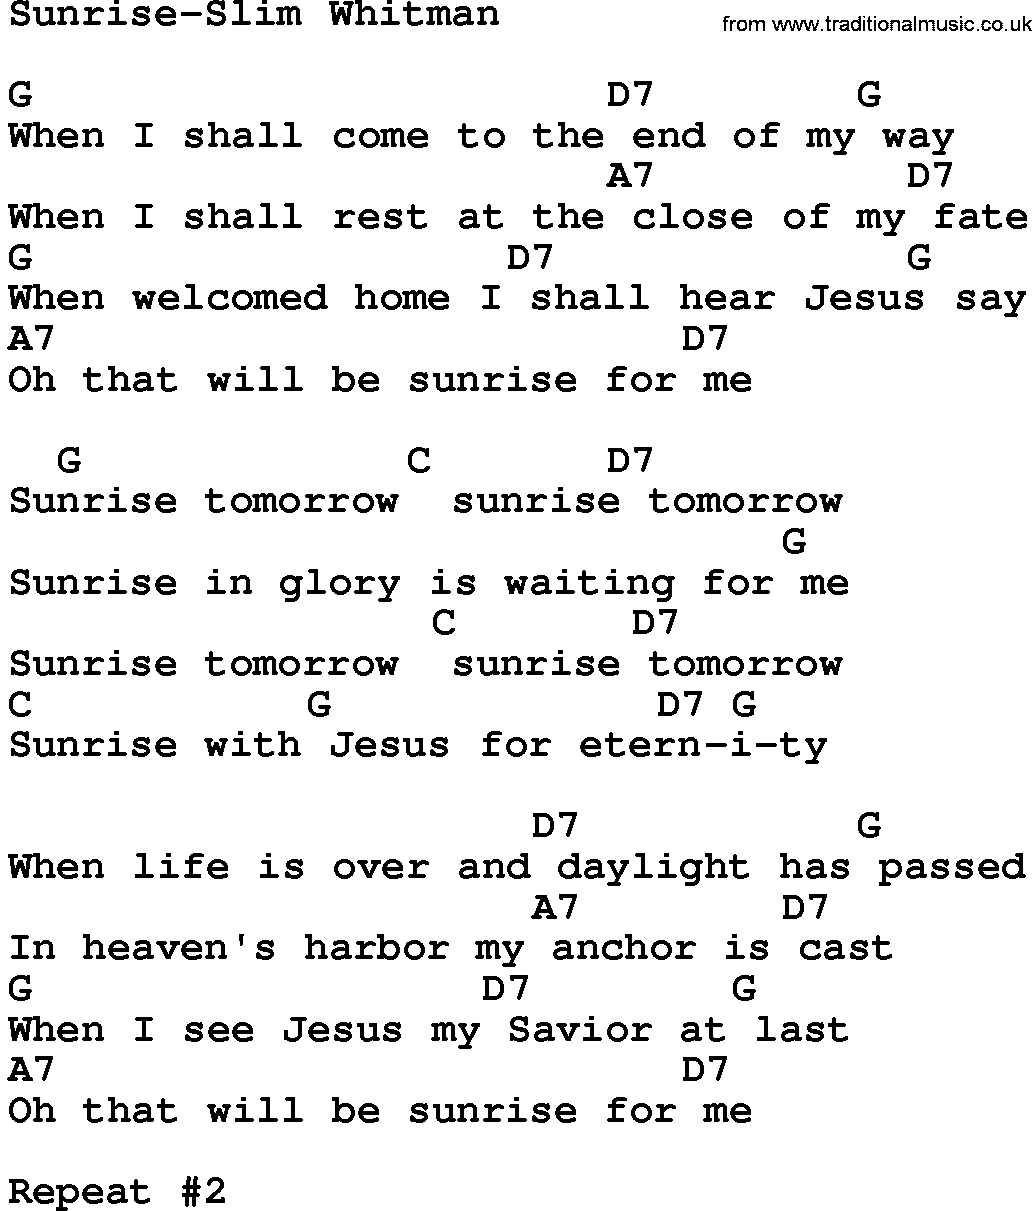 Country music song: Sunrise-Slim Whitman lyrics and chords